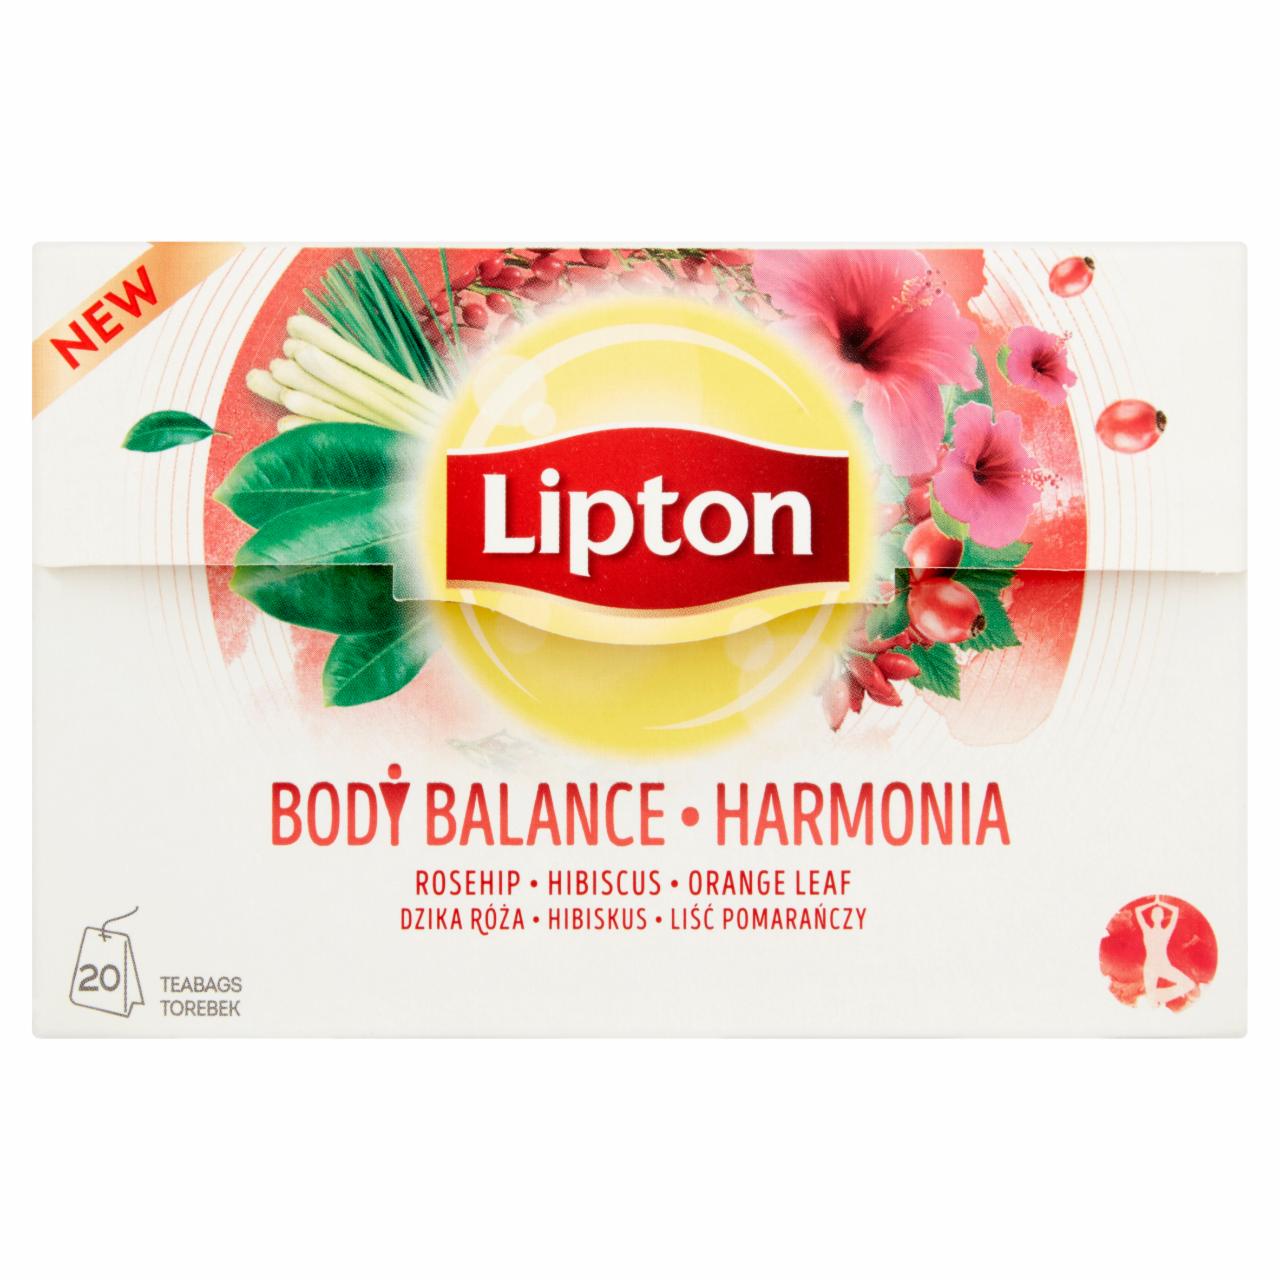 Zdjęcia - Lipton Harmonia Herbatka ziołowa 36 g (20 torebek)